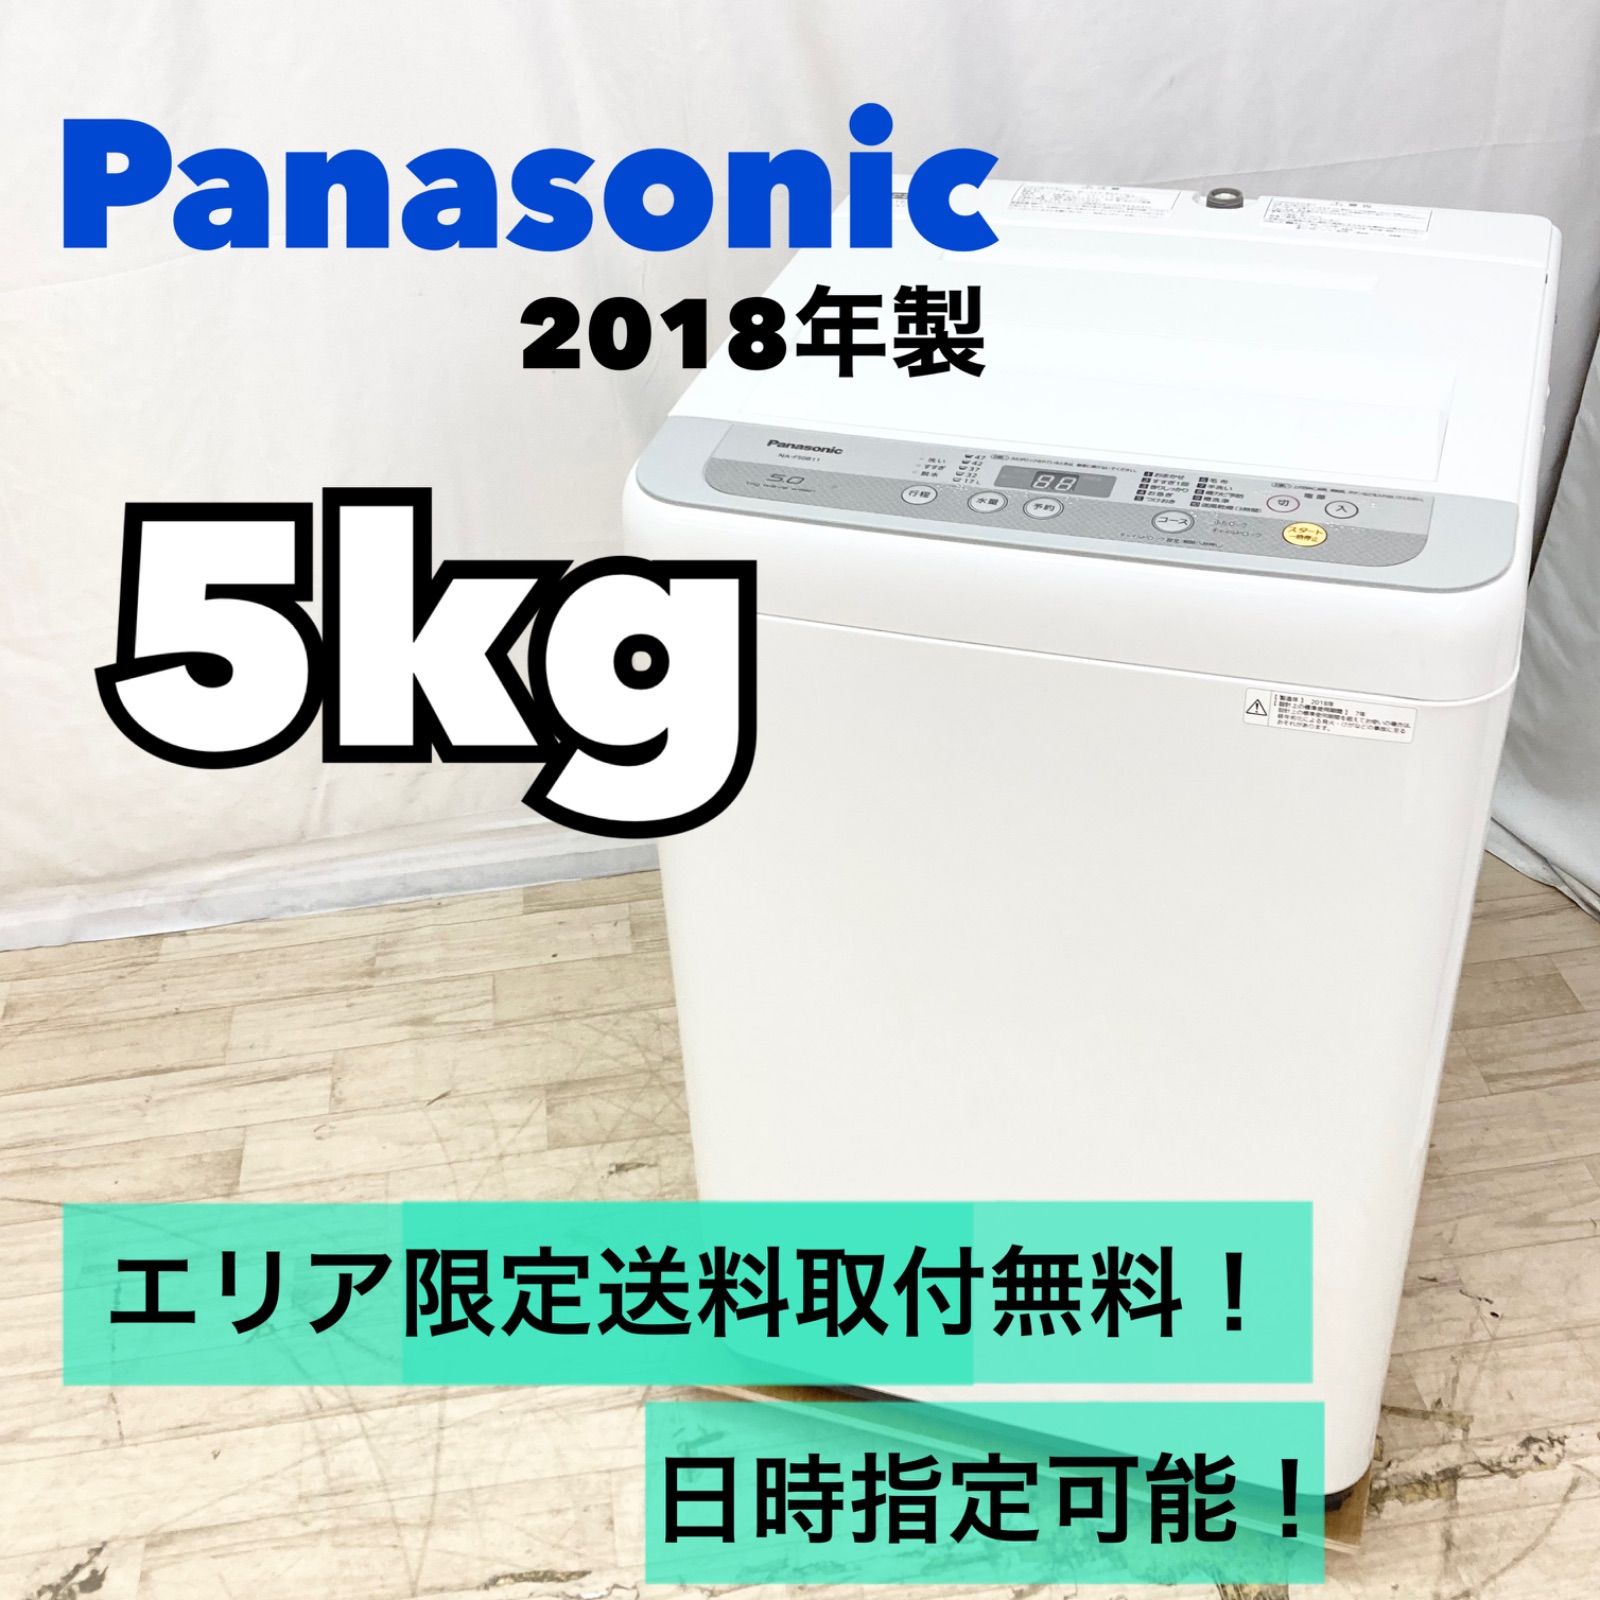 Panasonic パナソニック 5kg 縦型洗濯機 NA-F50B11 2018年製 白